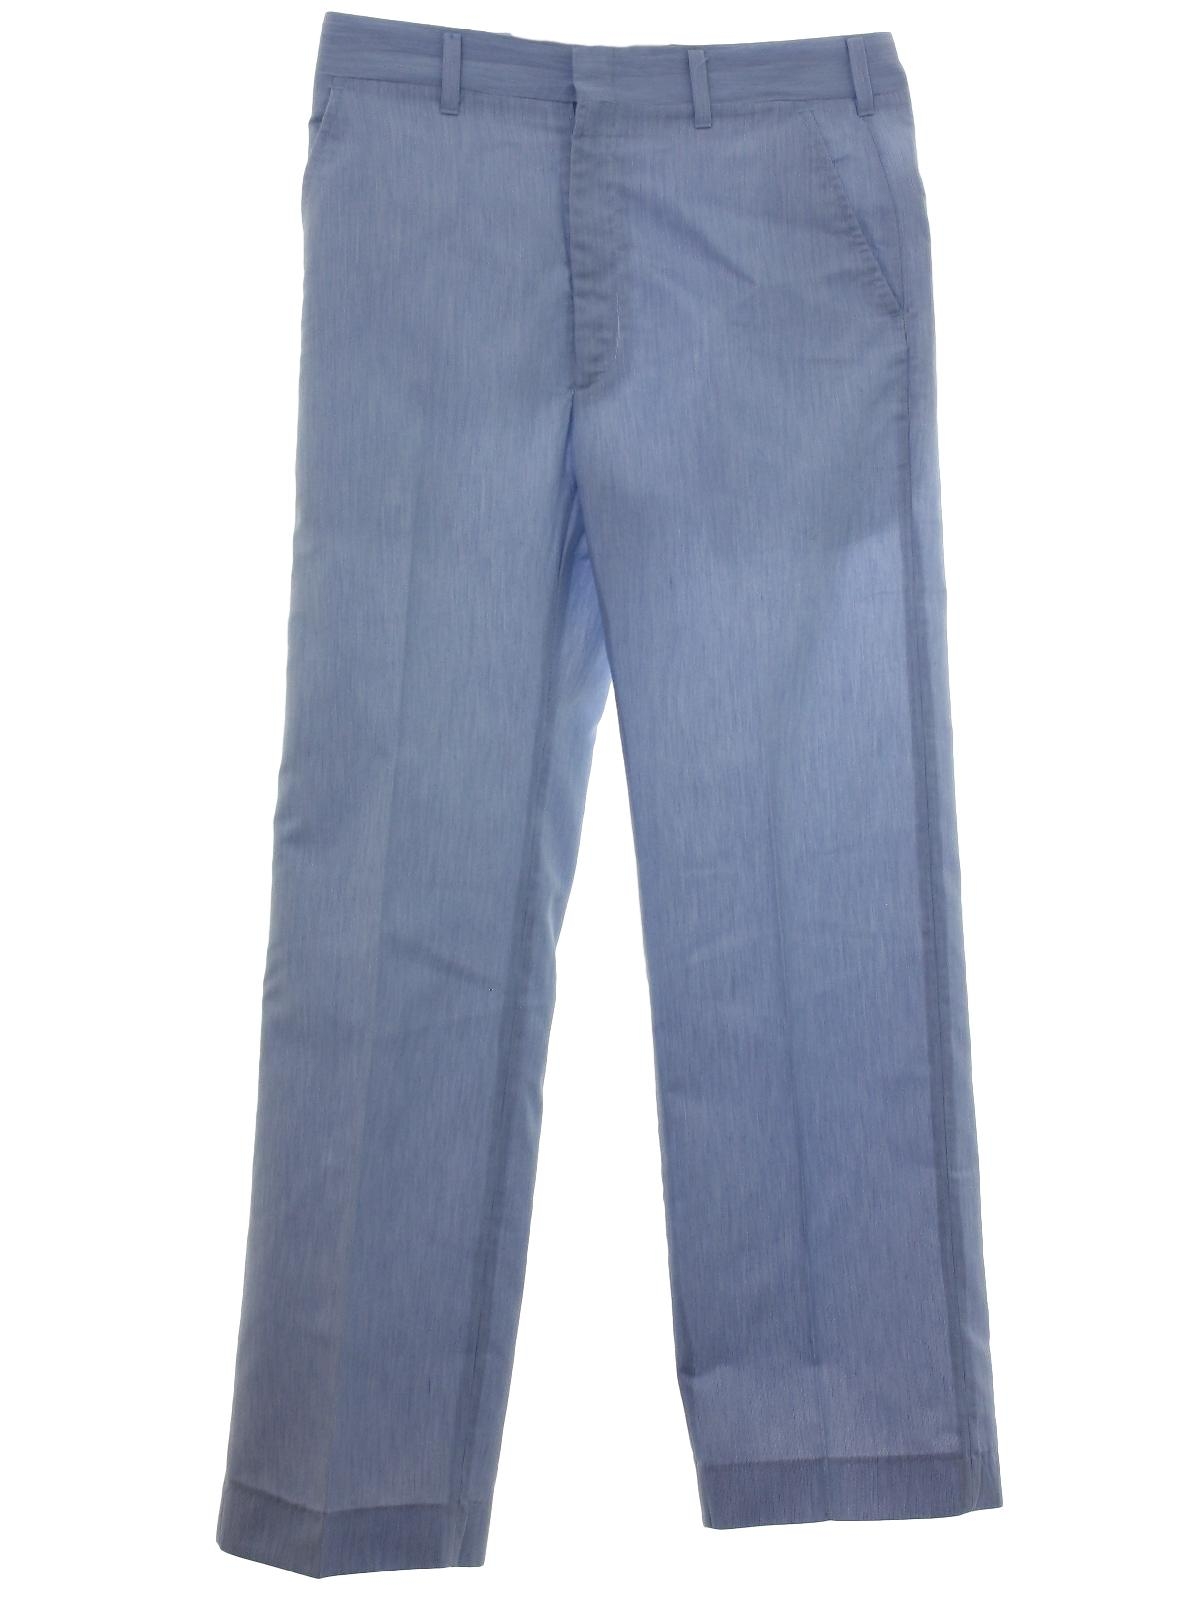 Vintage Haggar Slacks, Made in USA Eighties Pants: Early 80s -Haggar ...